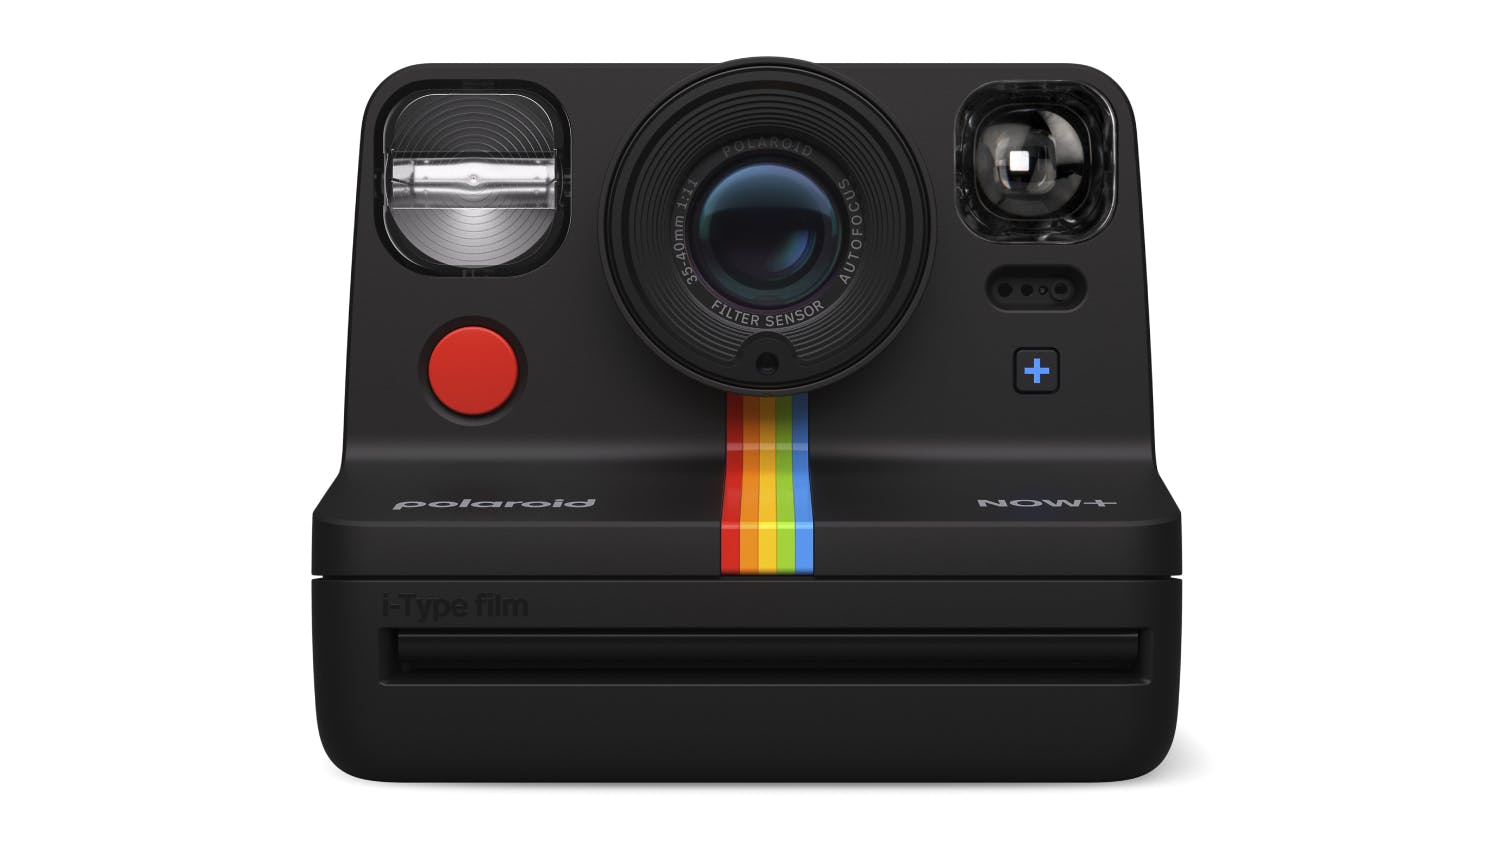 Now Generation 2 i-Type Instant Film Camera